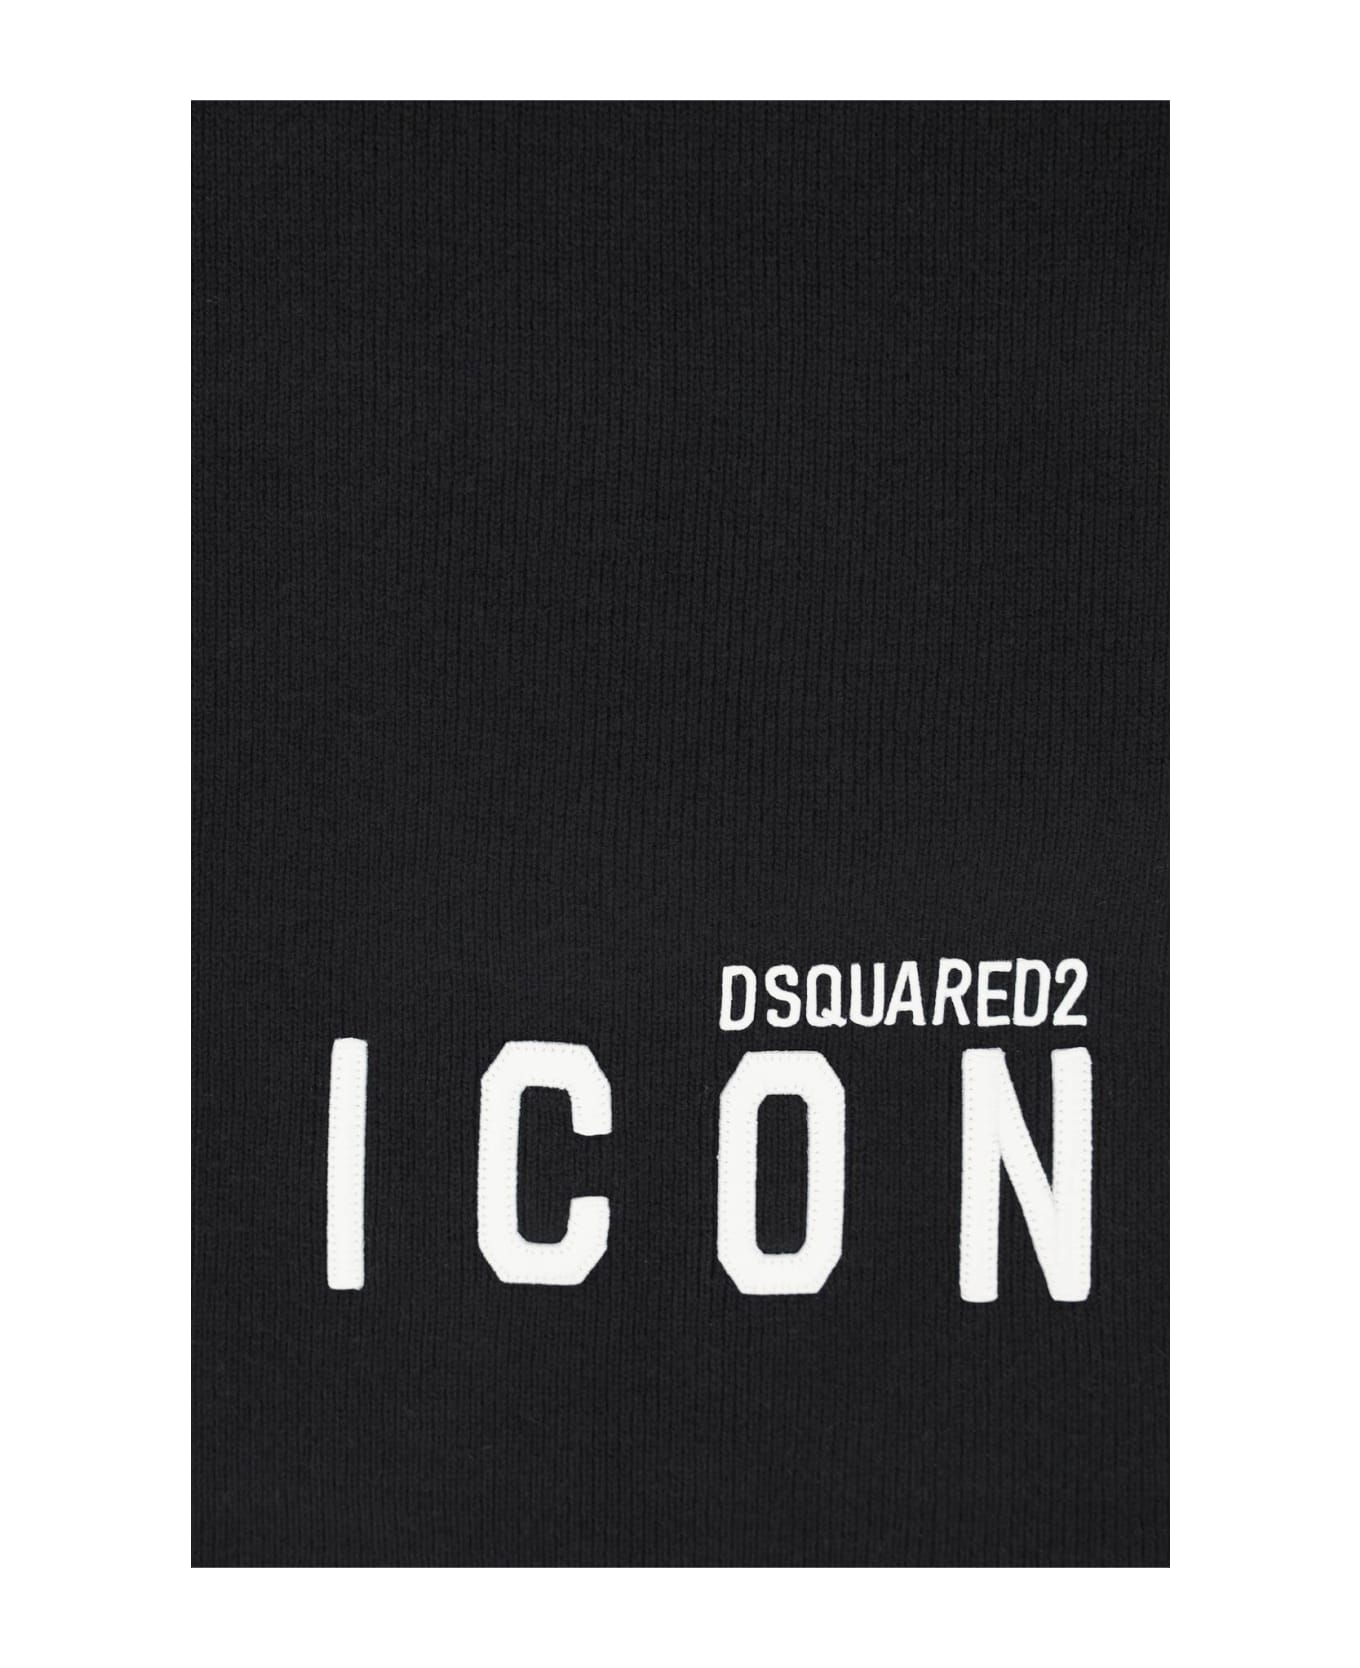 Dsquared2 'icon' Wool Scarf - BLACK WHITE (Black)